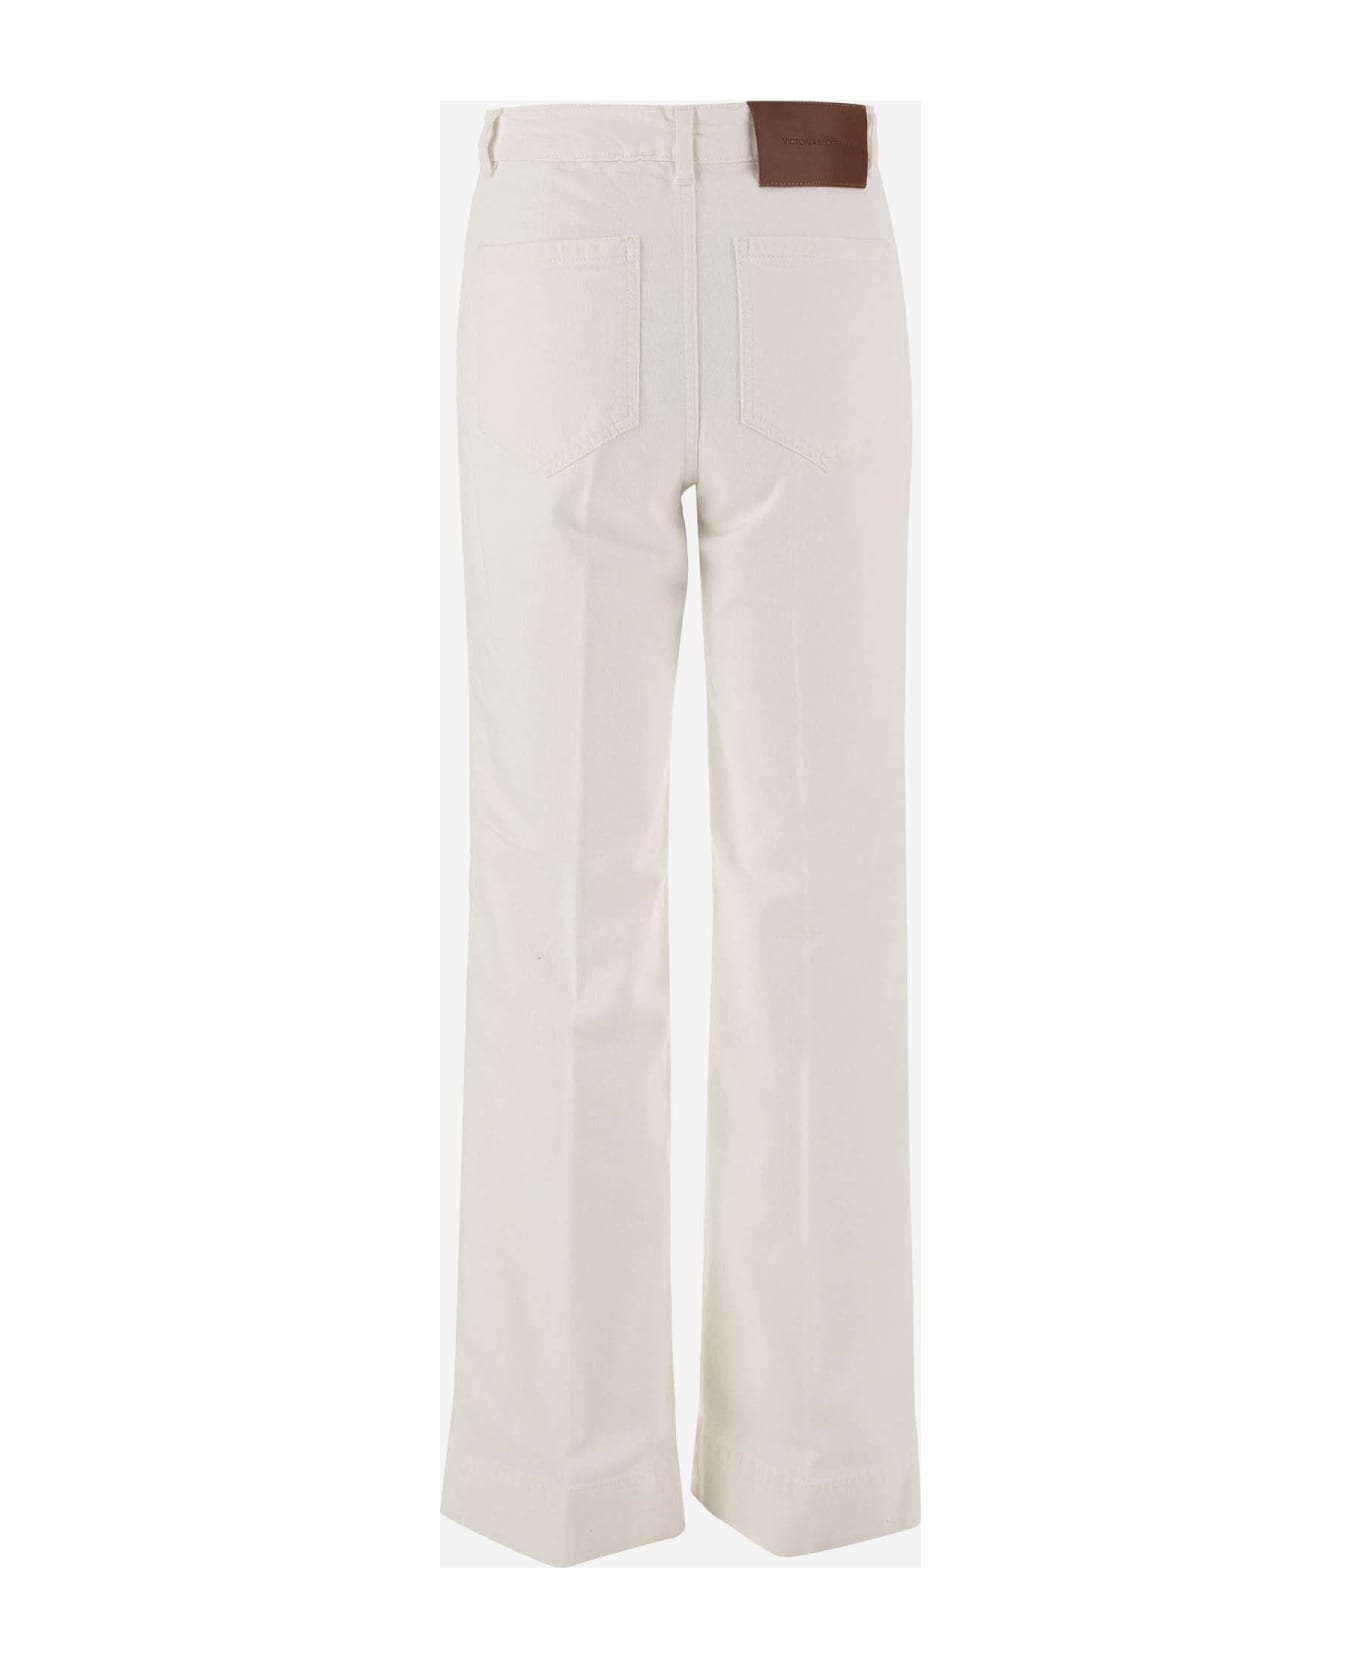 Victoria Beckham Jeans Model Alina High Waist - Washed White